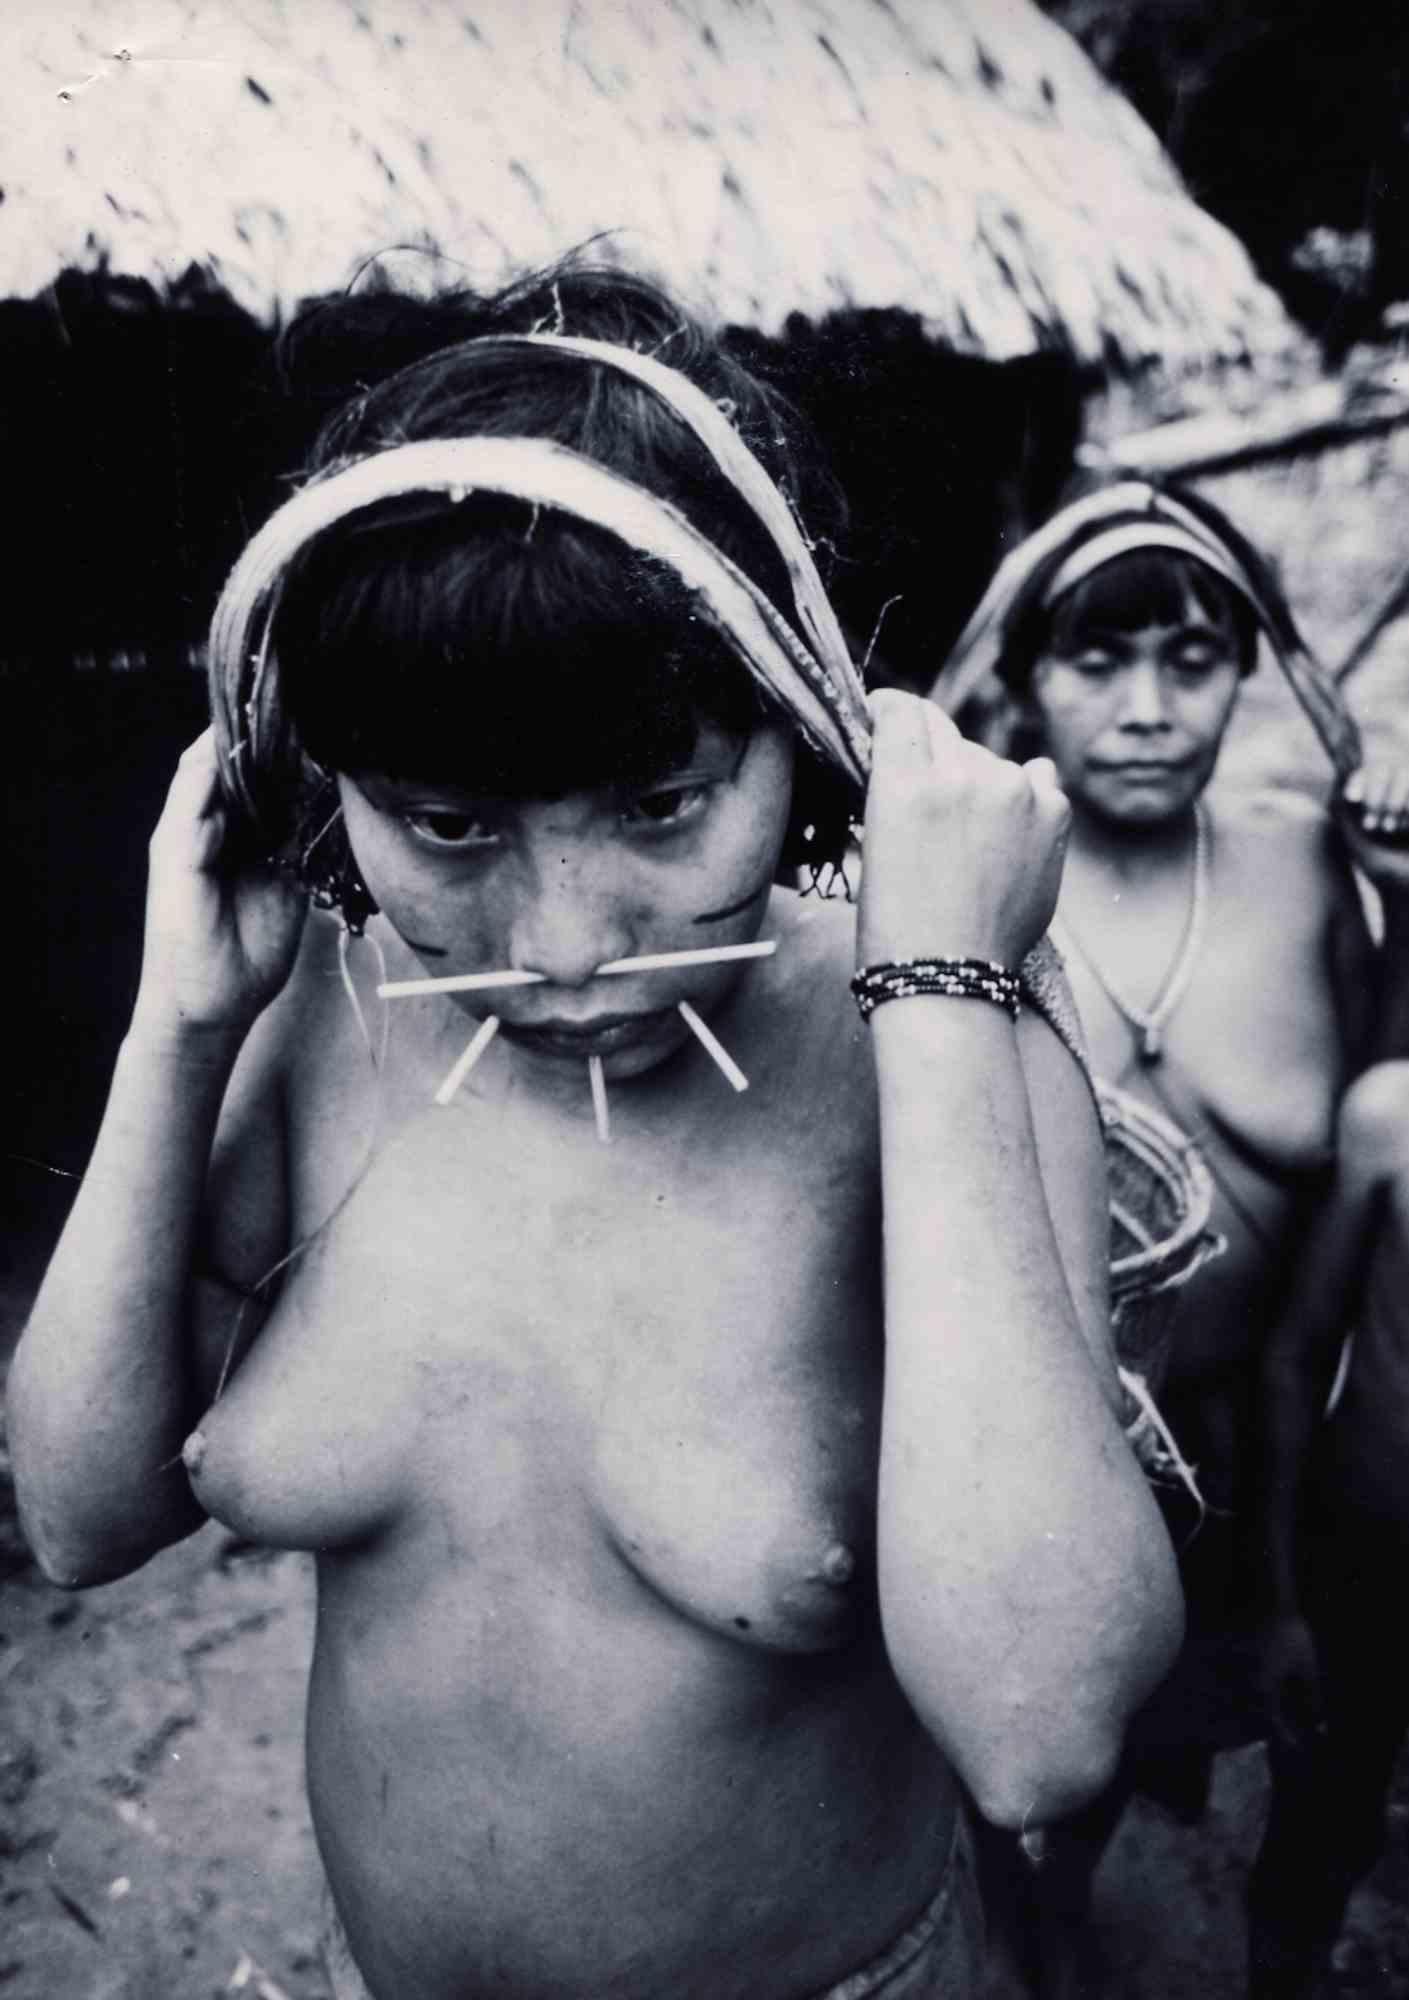 Unknown Figurative Photograph - Historical Photo - Indigenous - Vintage Photo - 1980s